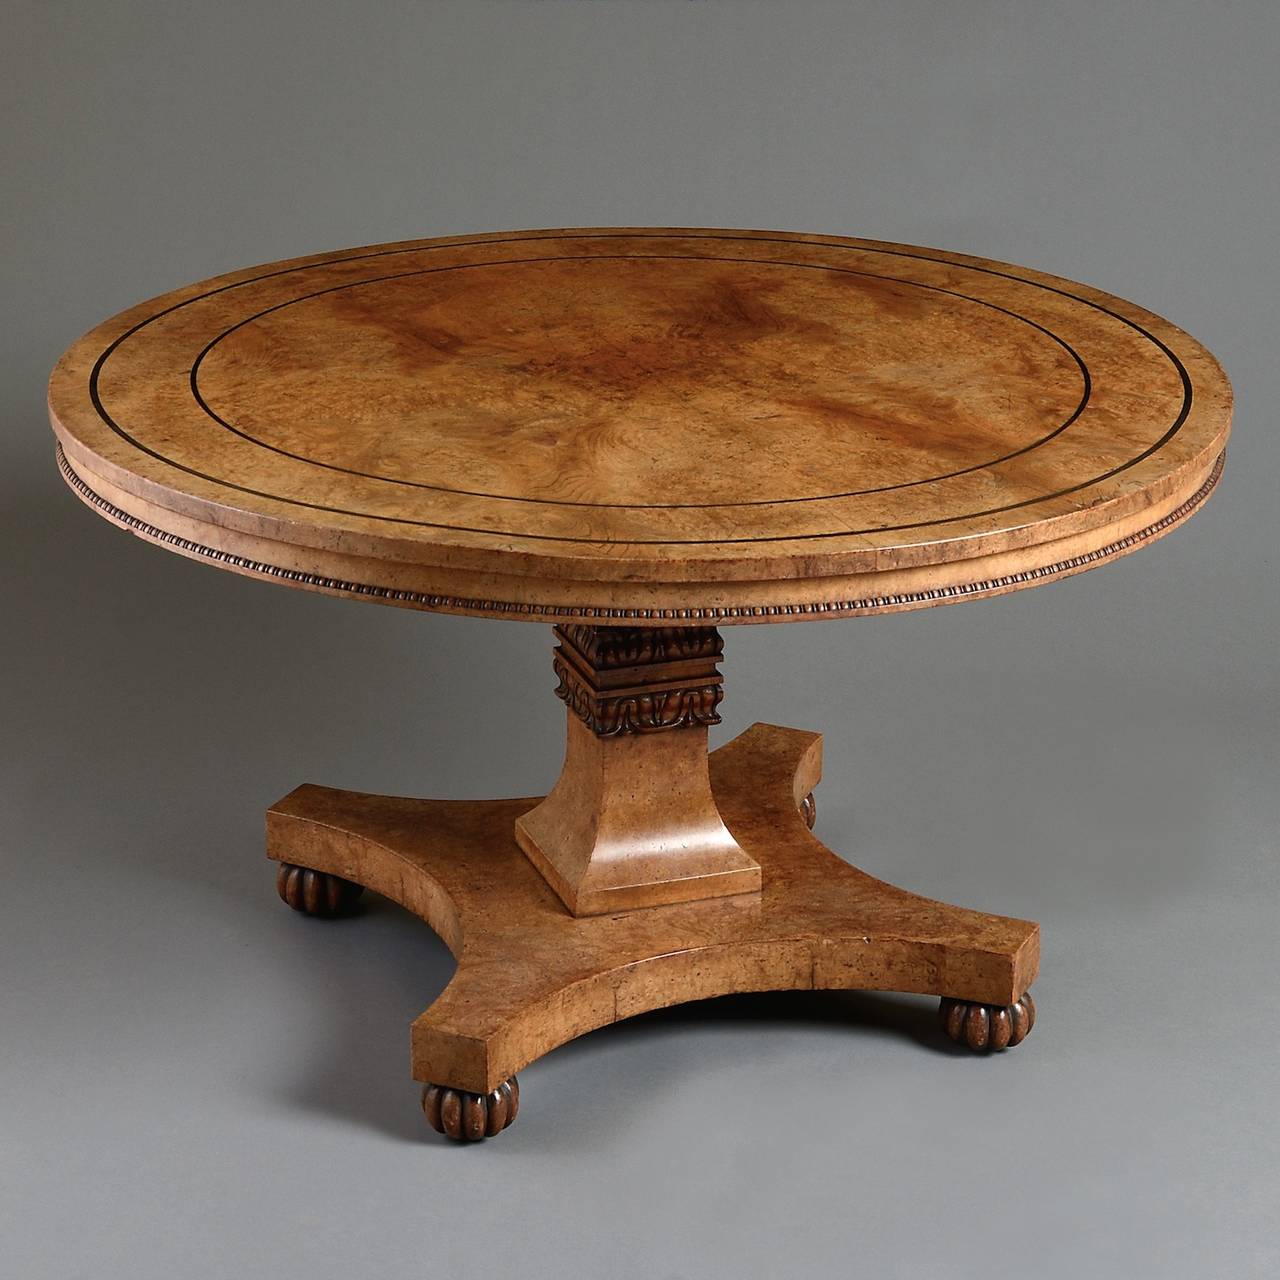 A fine Regency ebony inlaid burr elm centre table by William Trotter of Edinburgh, circa 1820.